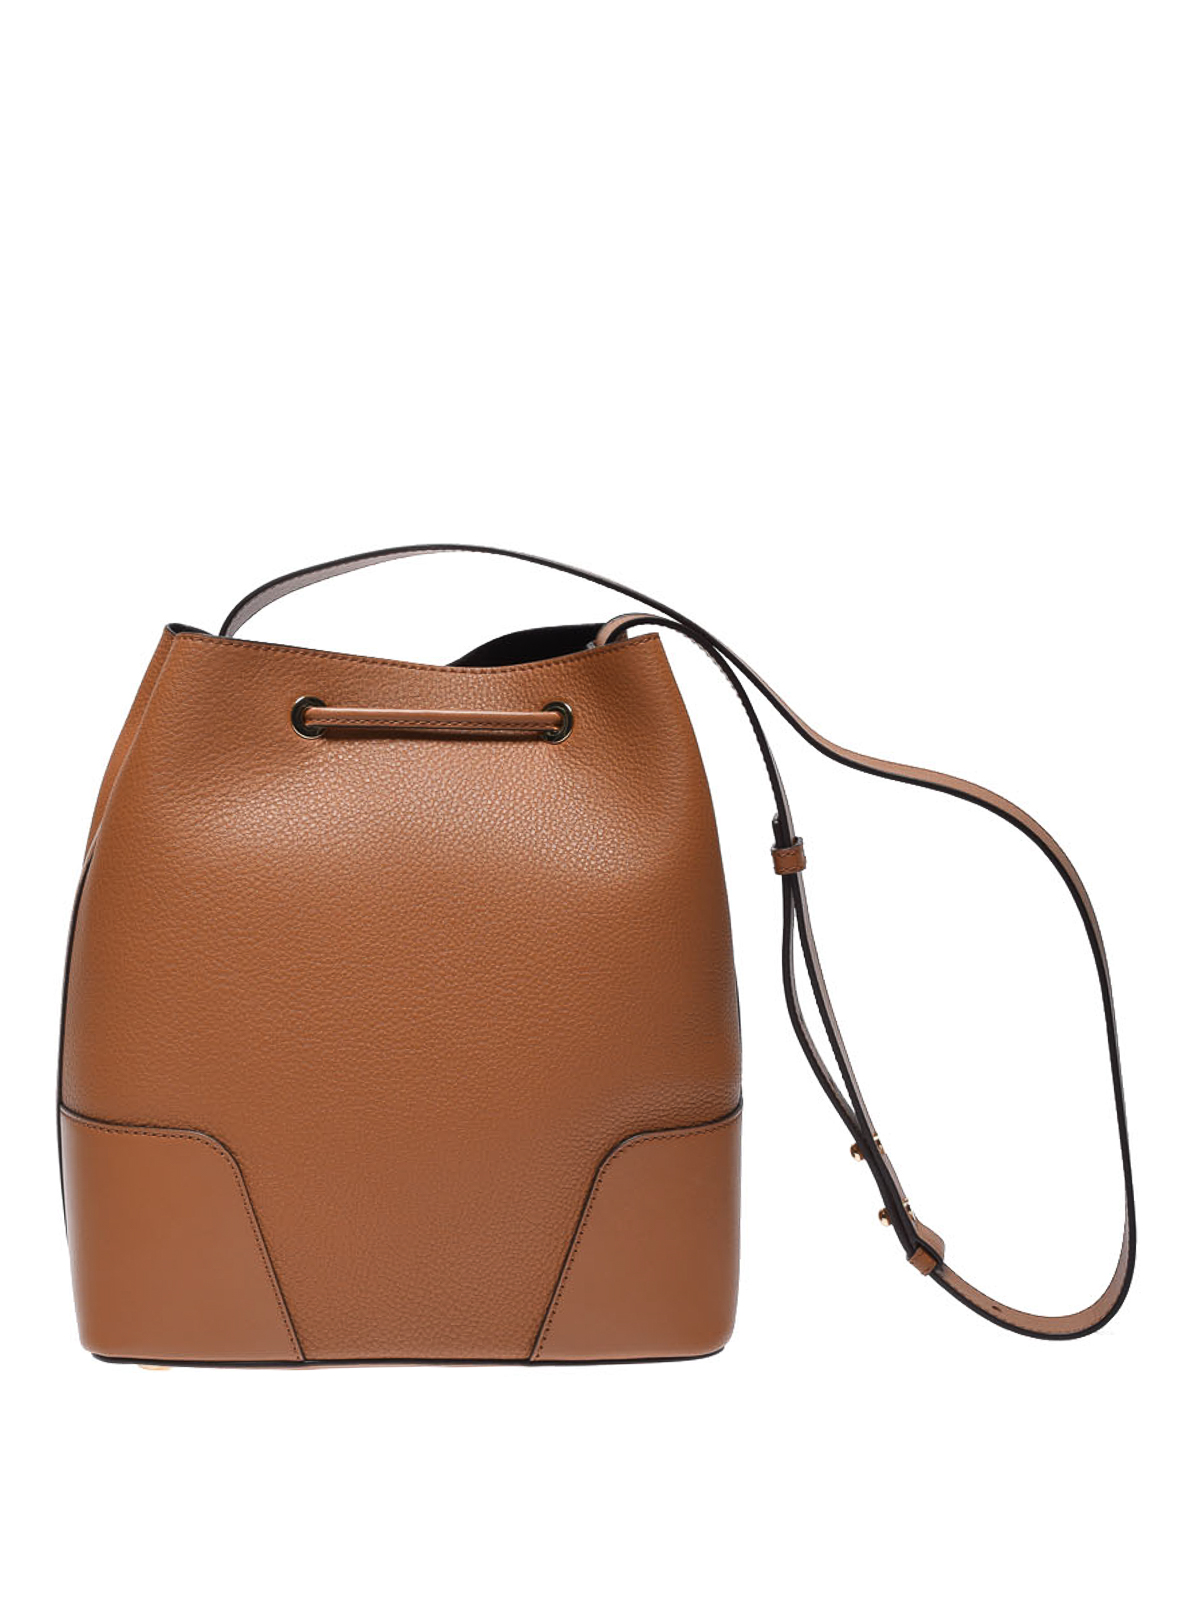 Michael Kors Bucket bags and bucket purses for Women